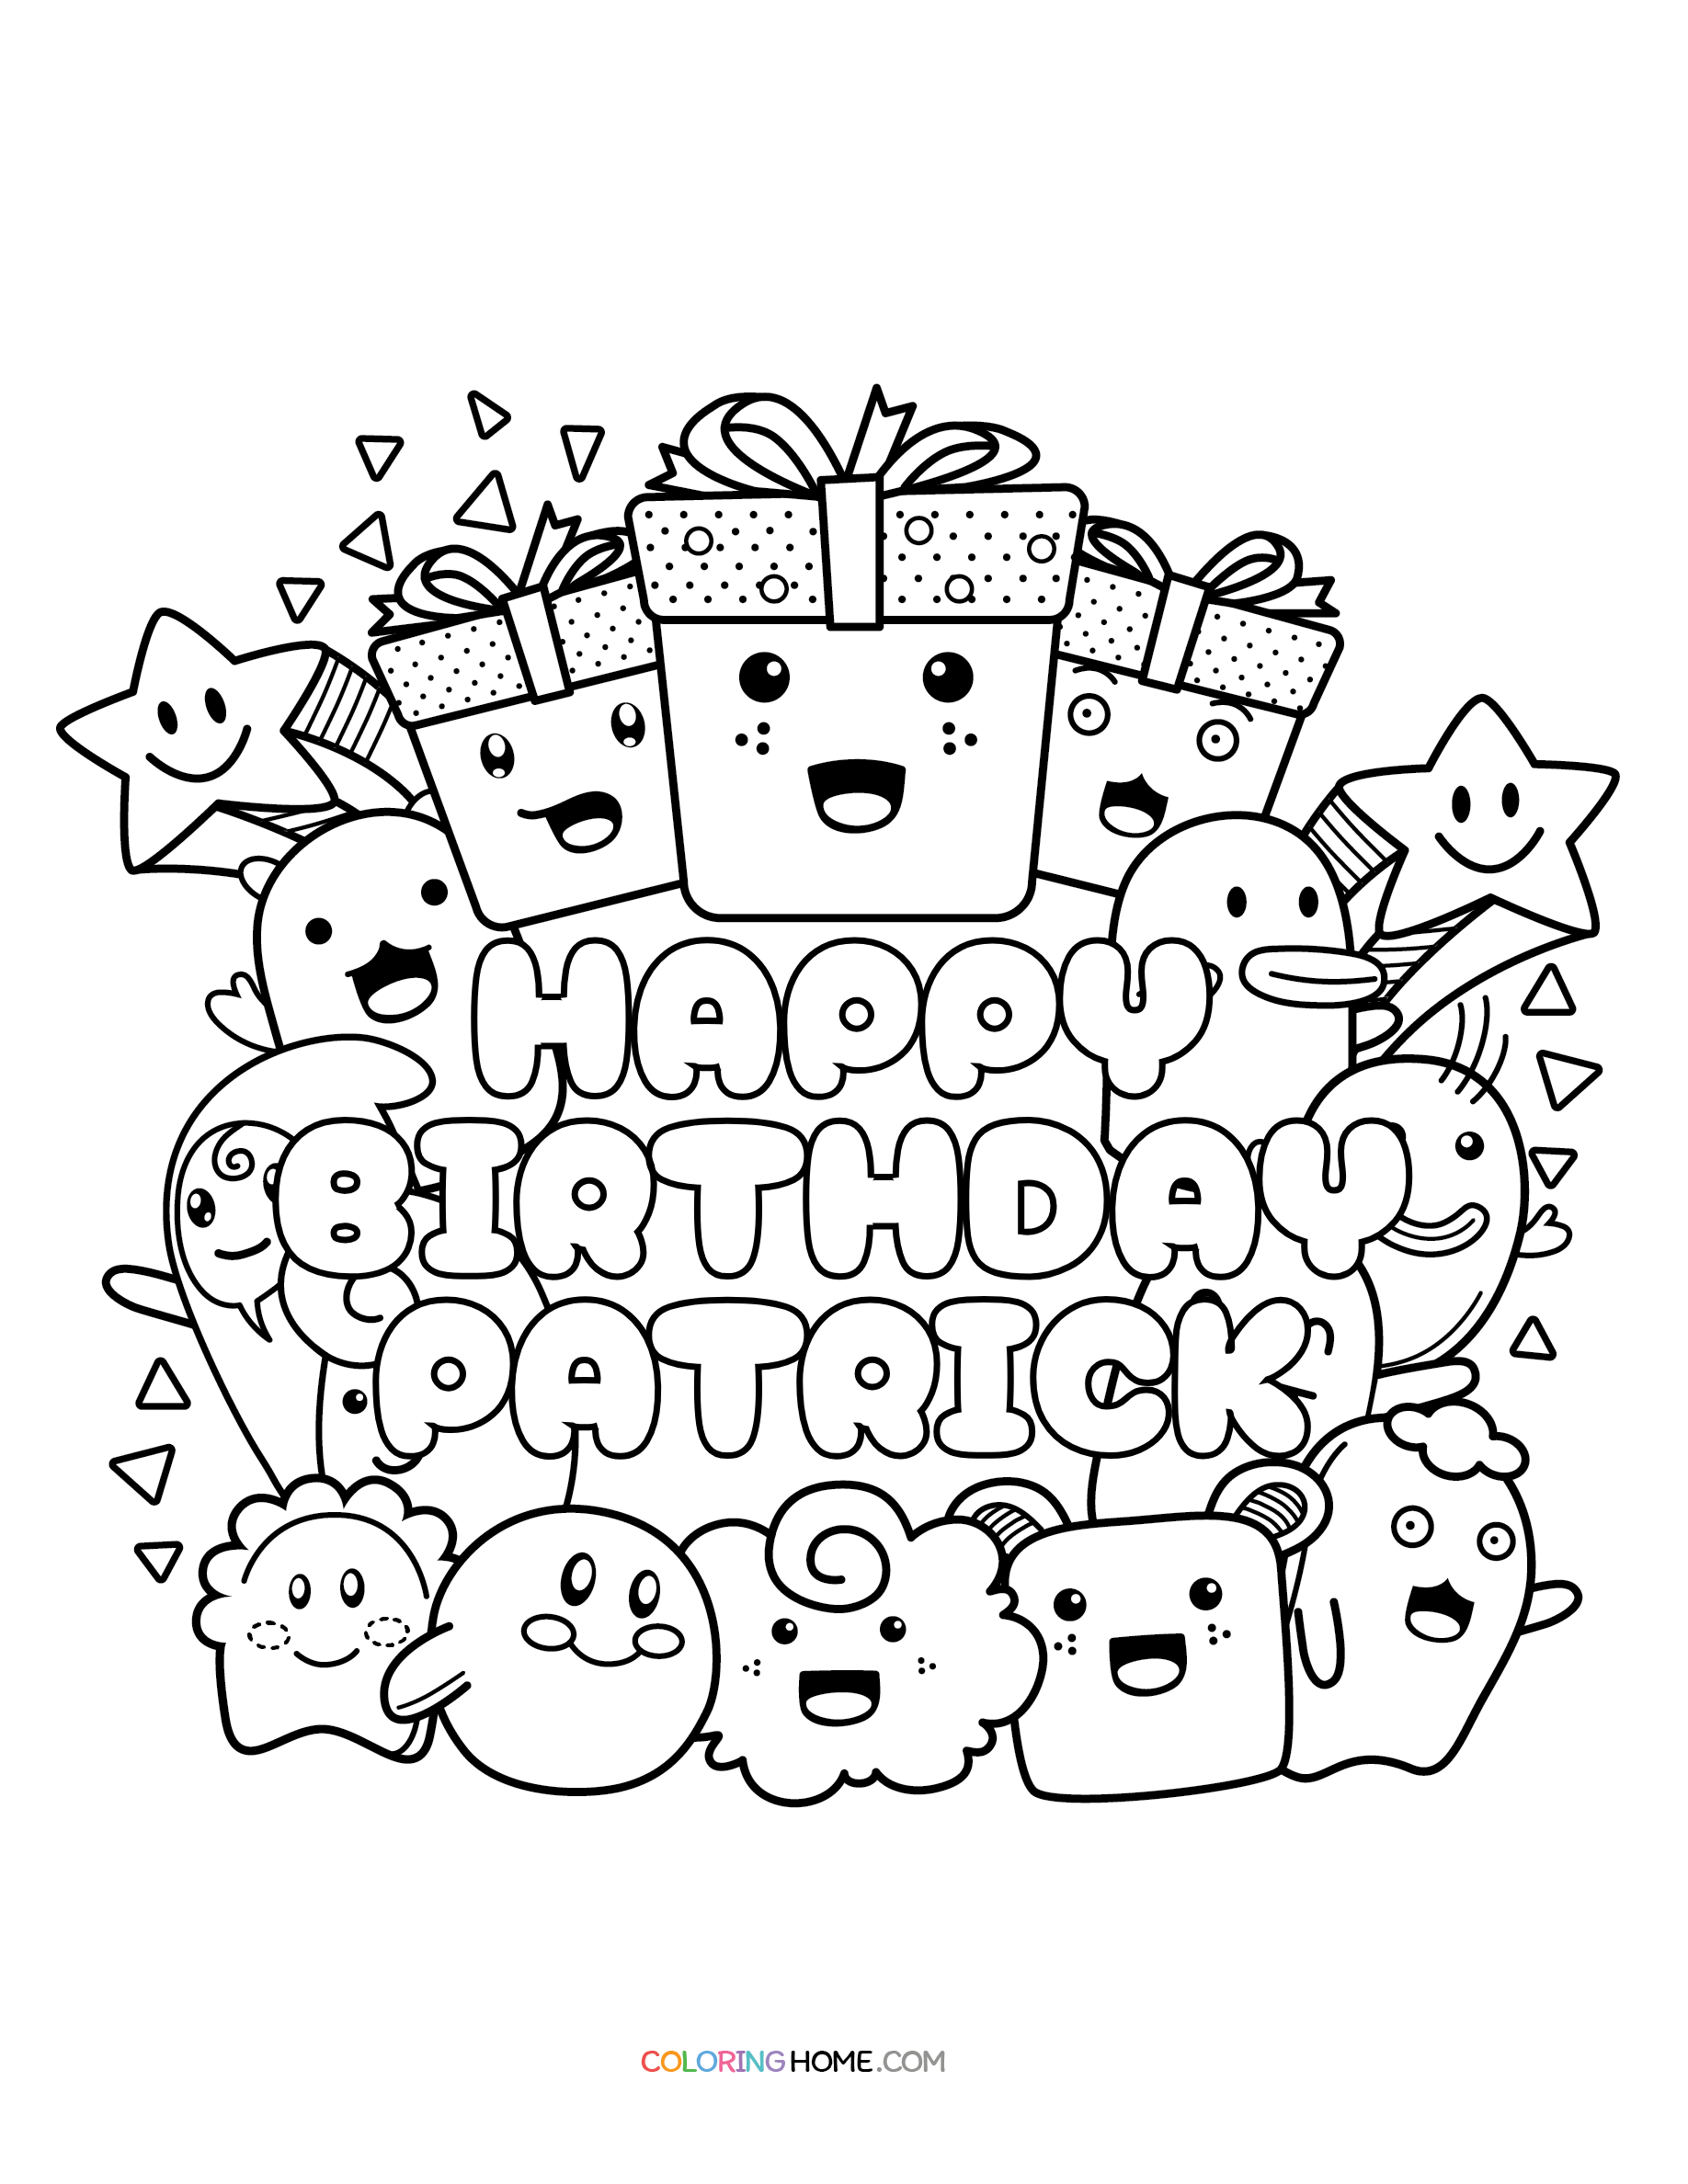 Happy Birthday Patrick coloring page